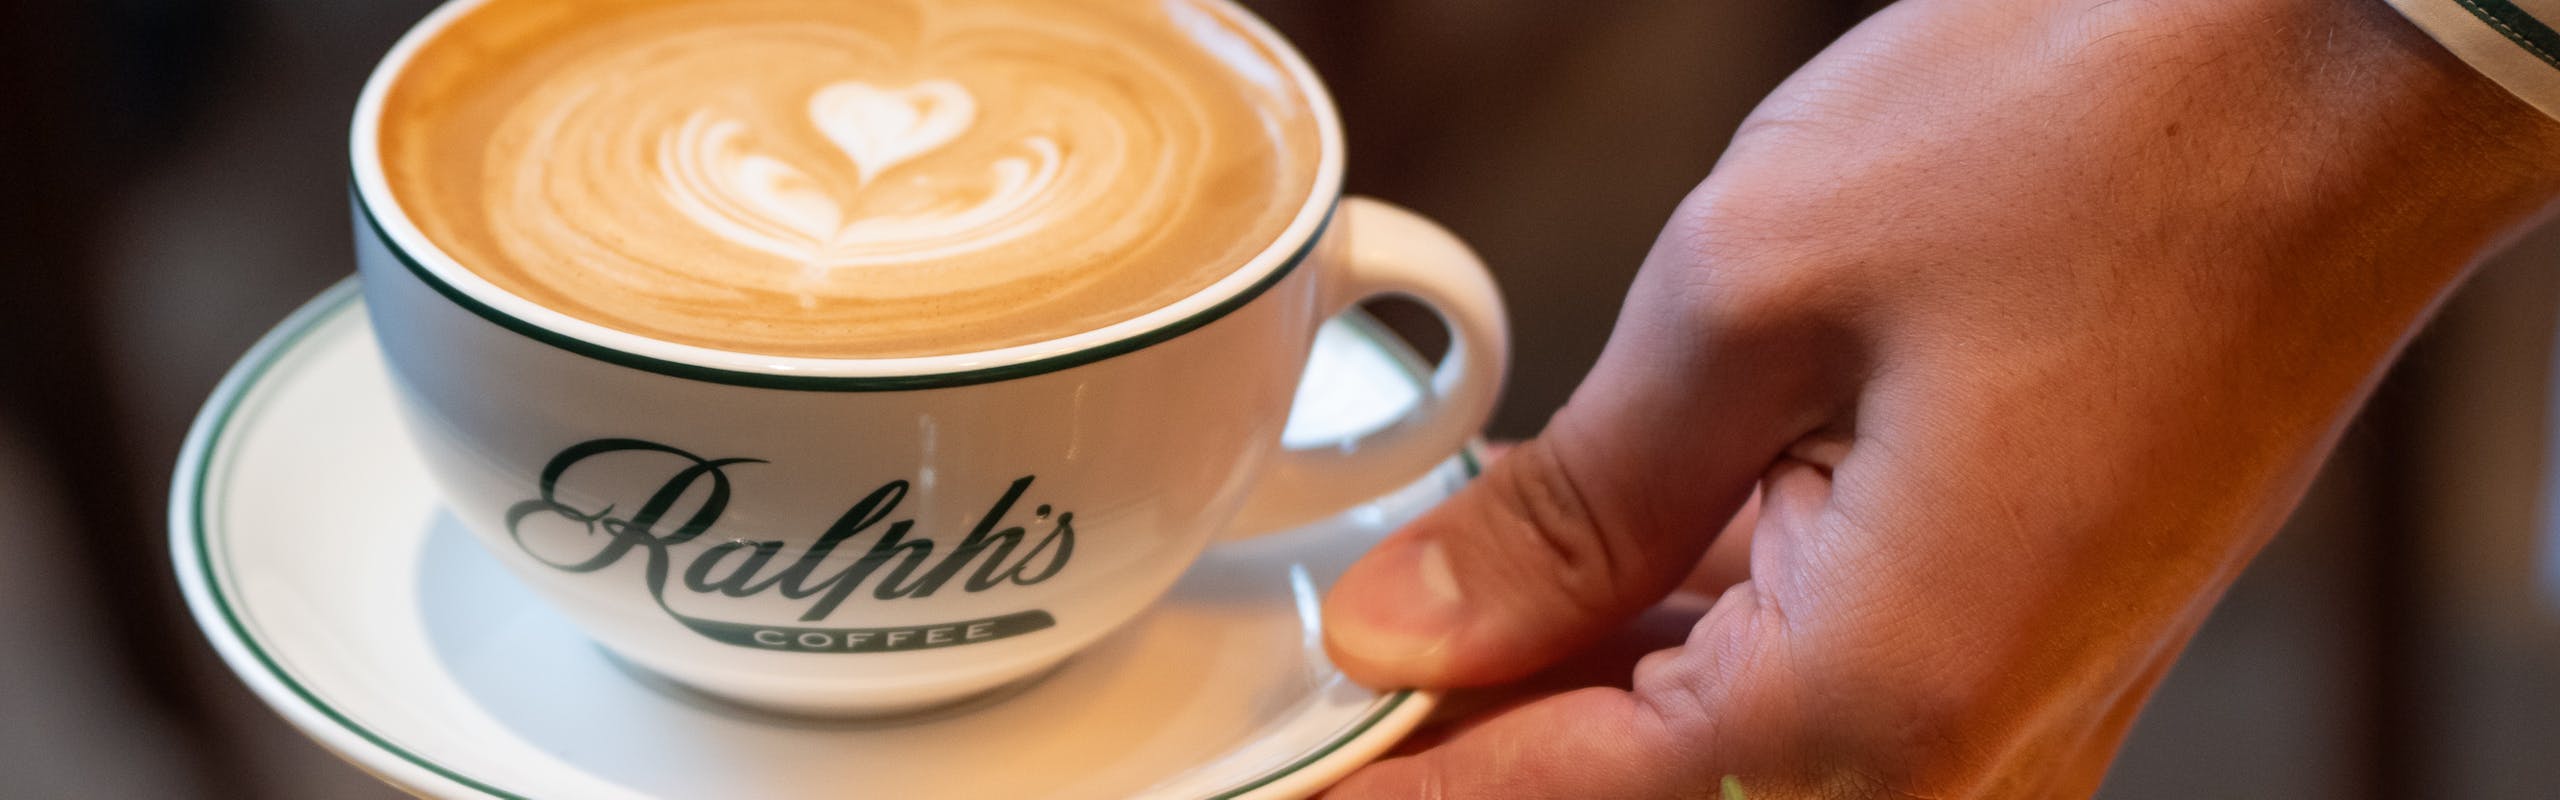 paris coffee shops: Ralphs Coffee Paris latte flowers